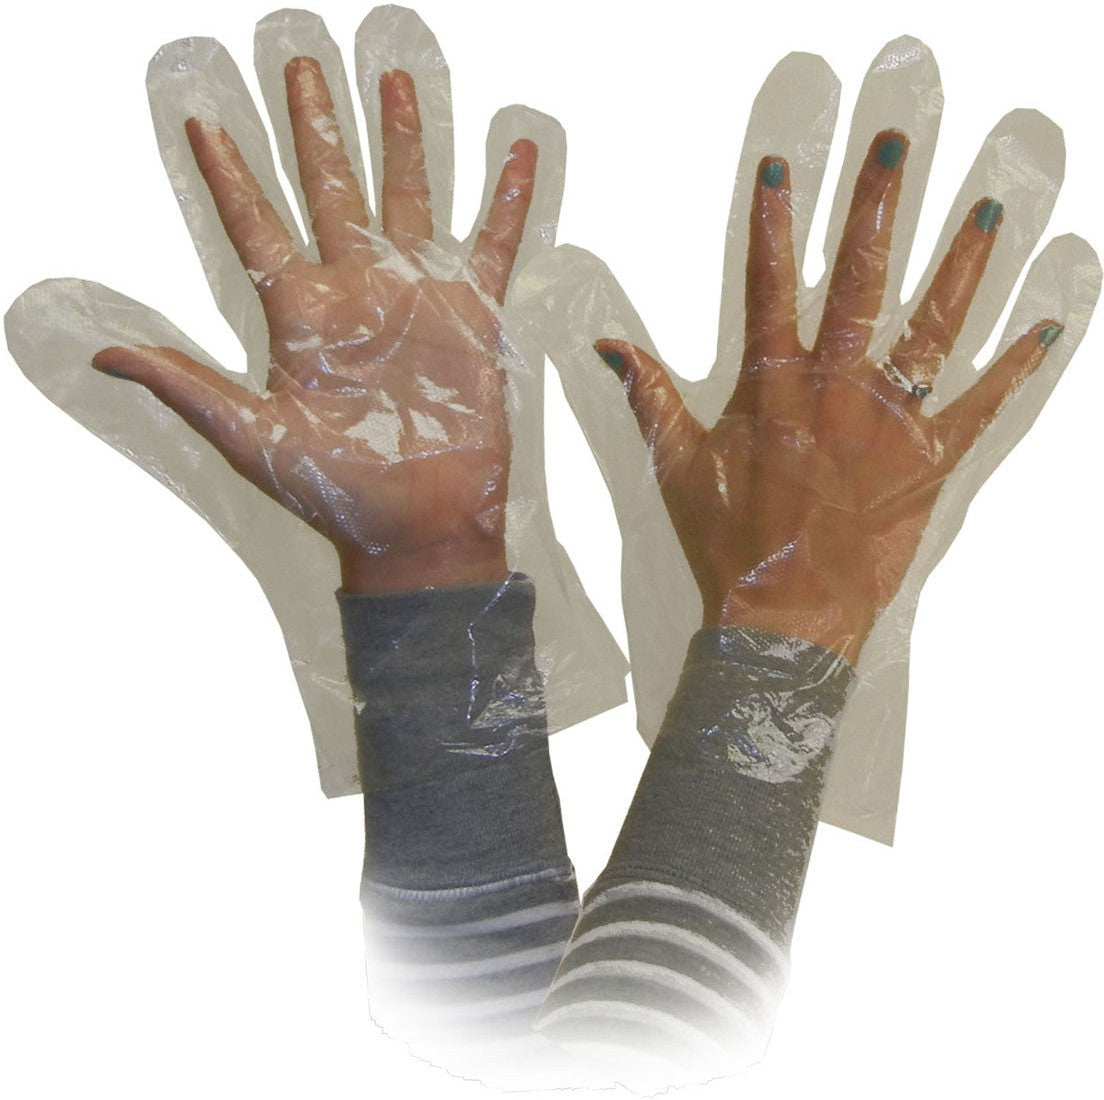 RONCO - Large Polyethylene Powder-Free Deli Gloves, 500/bx - 143